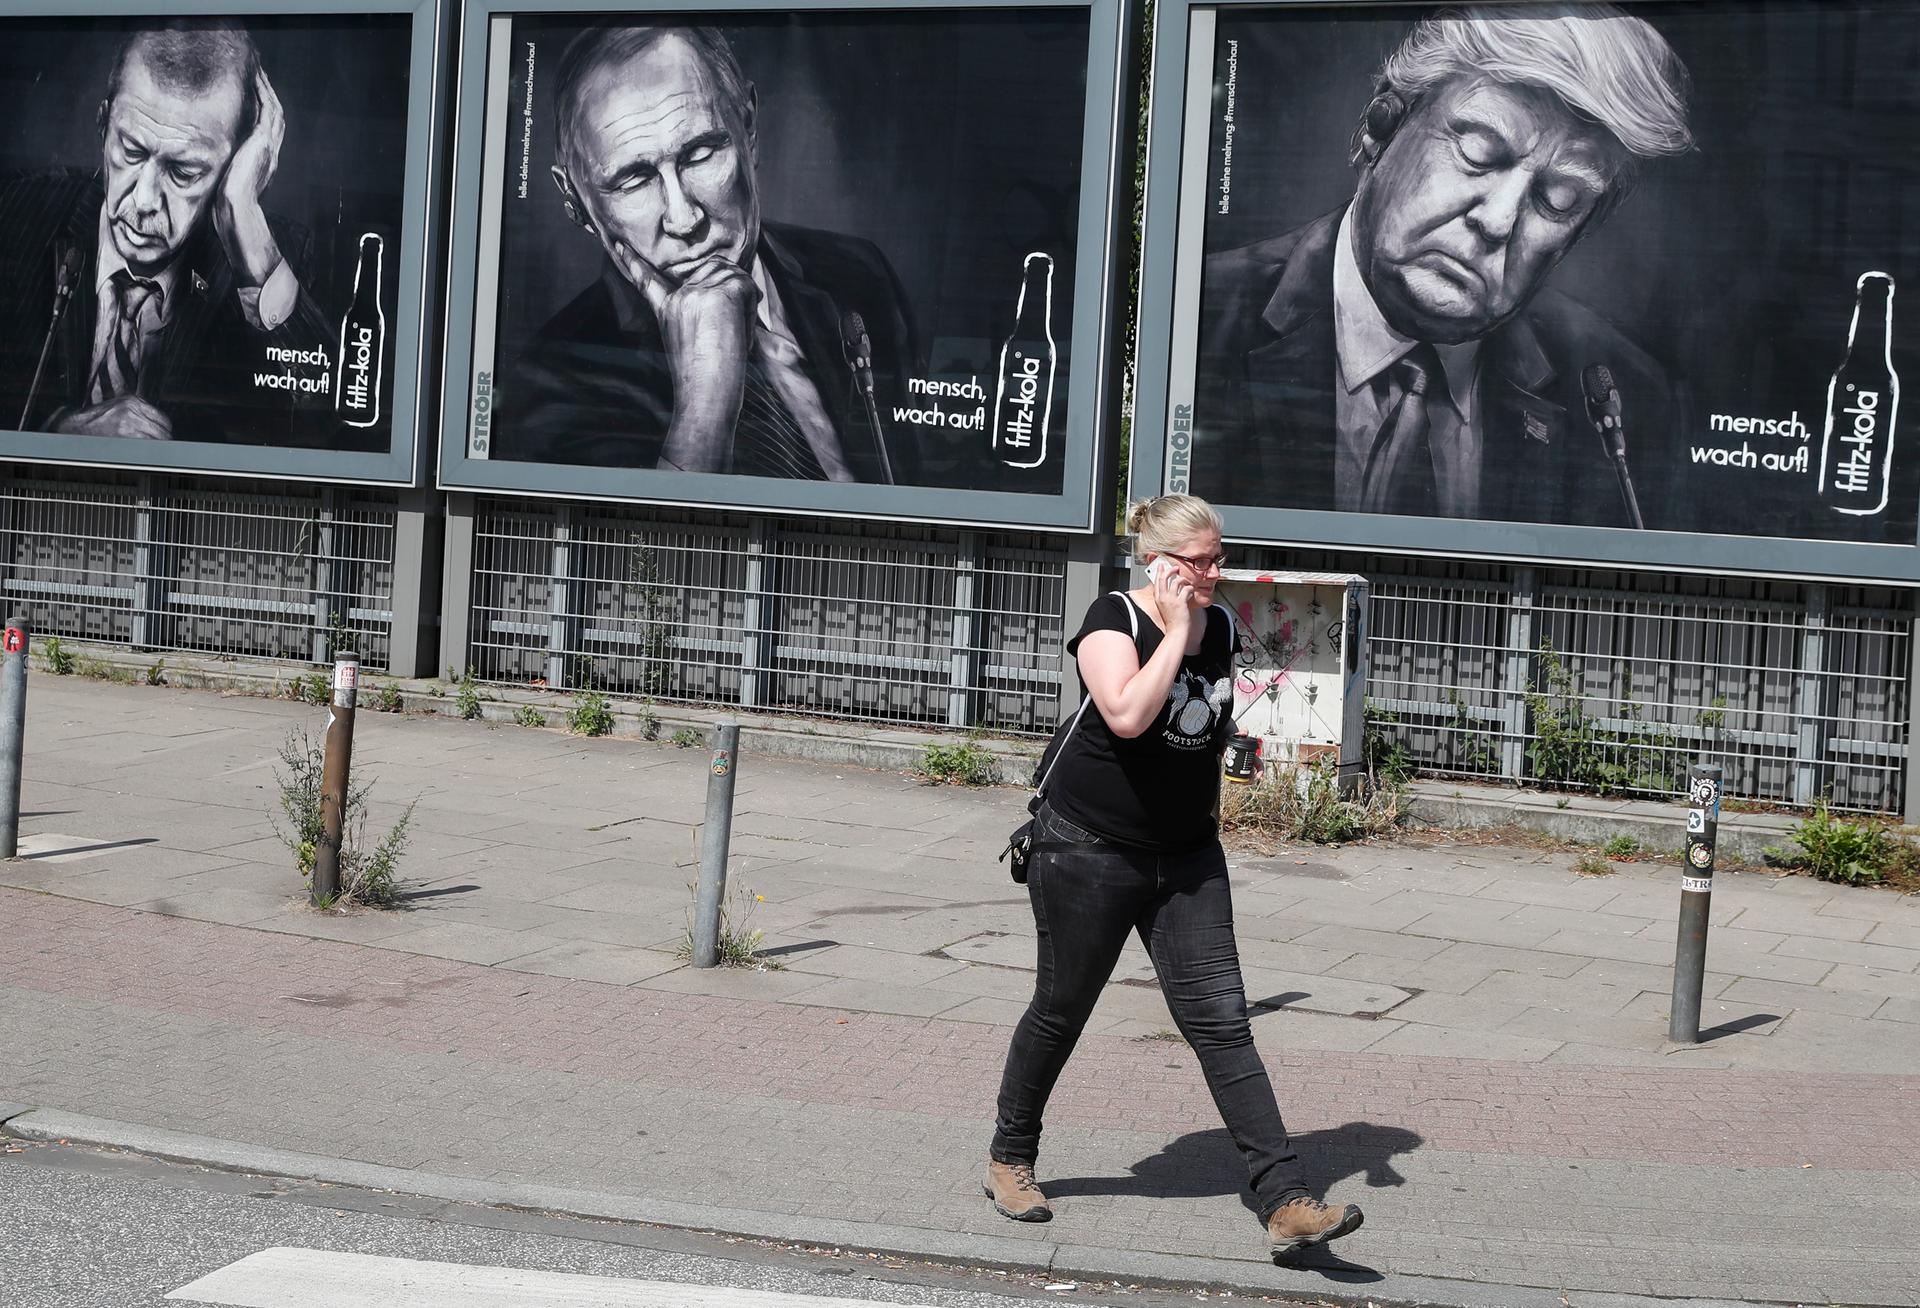 A woman walks past advertising posters of a German soft drink producer depicting Turkey's President Tayyip Erdogan, Russian President Vladimir Putin and President Donald Trump.